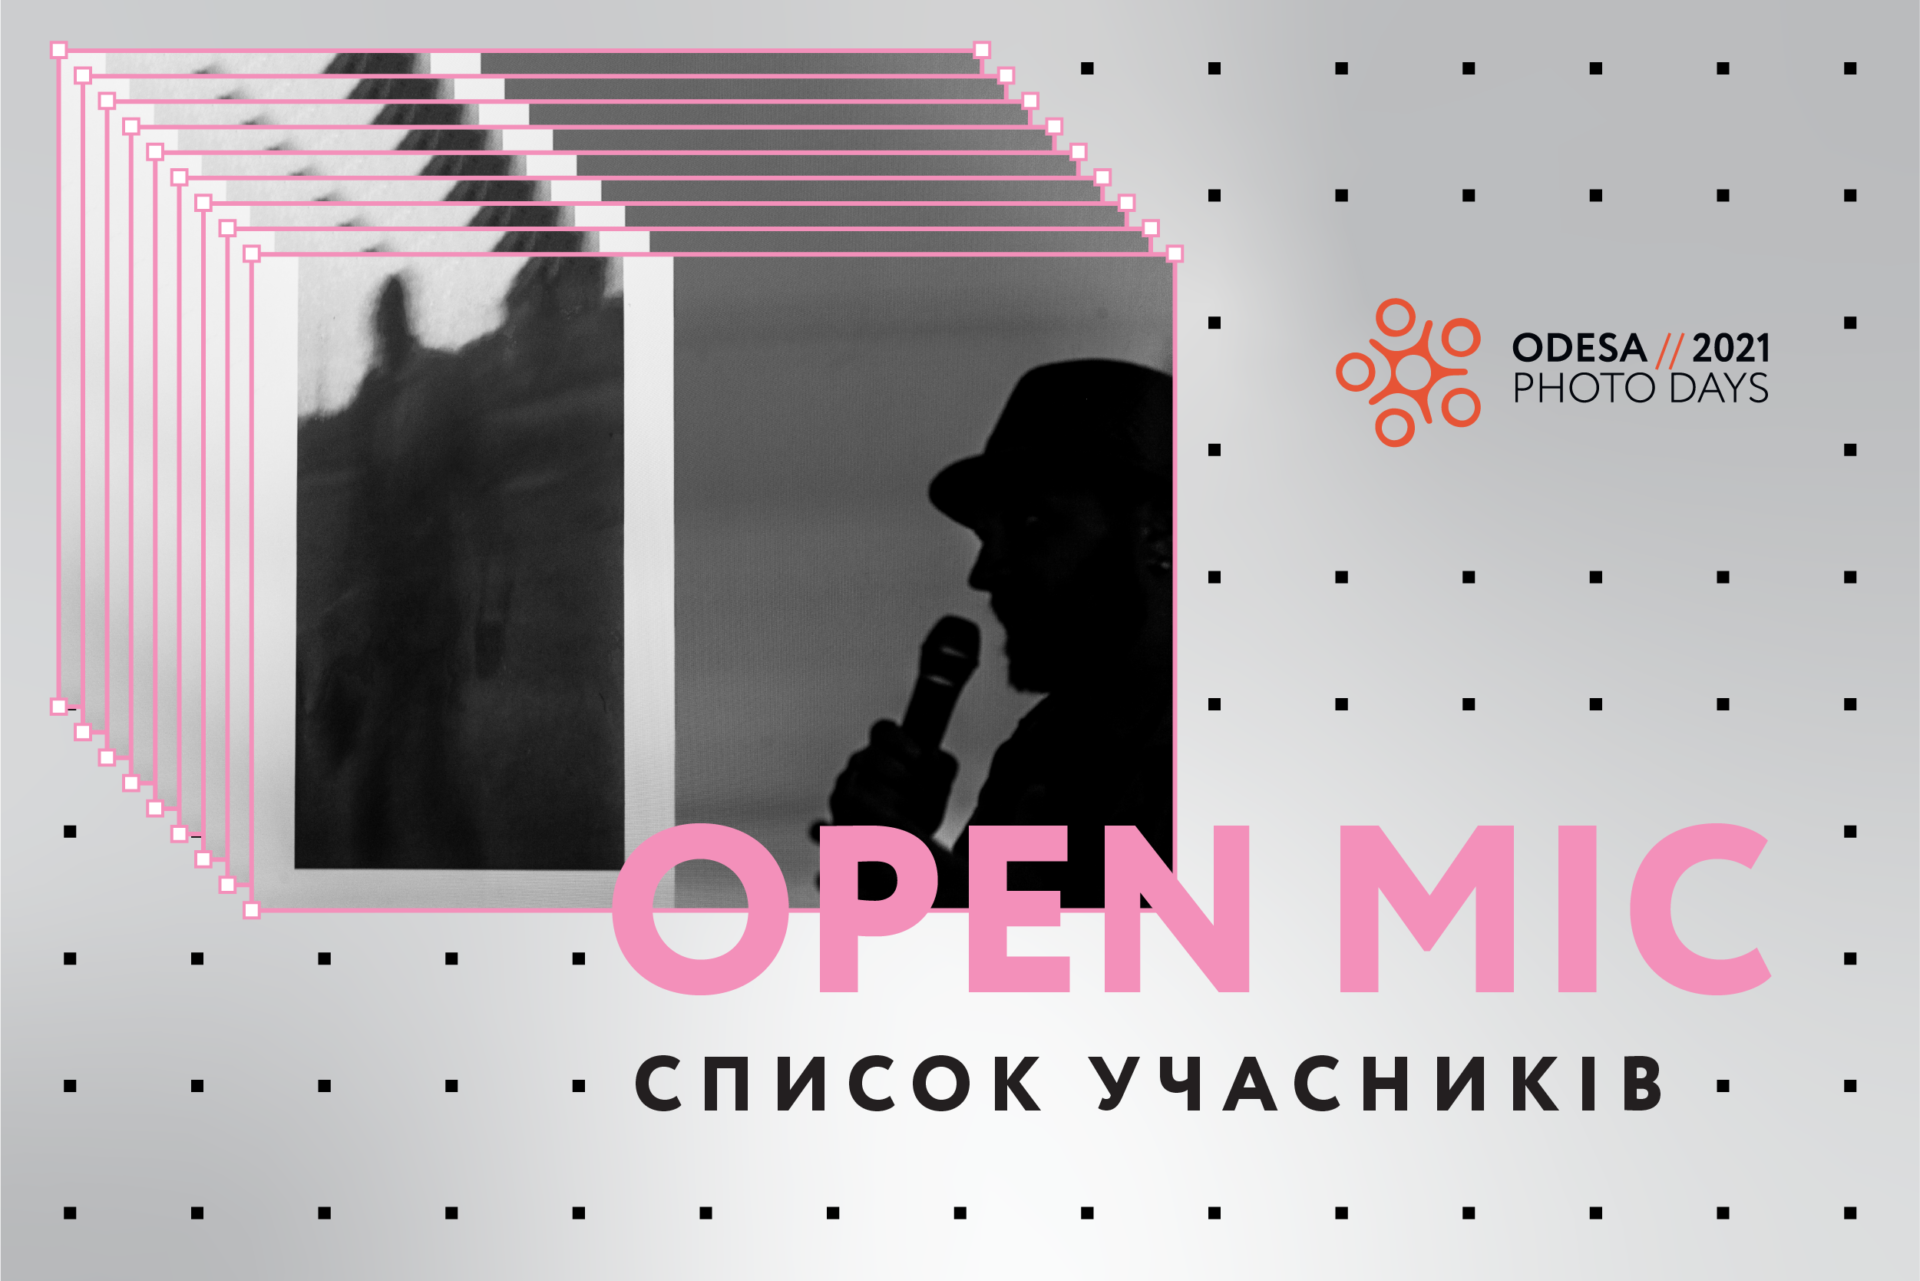 Open Mic Odesa Photo Days 2021